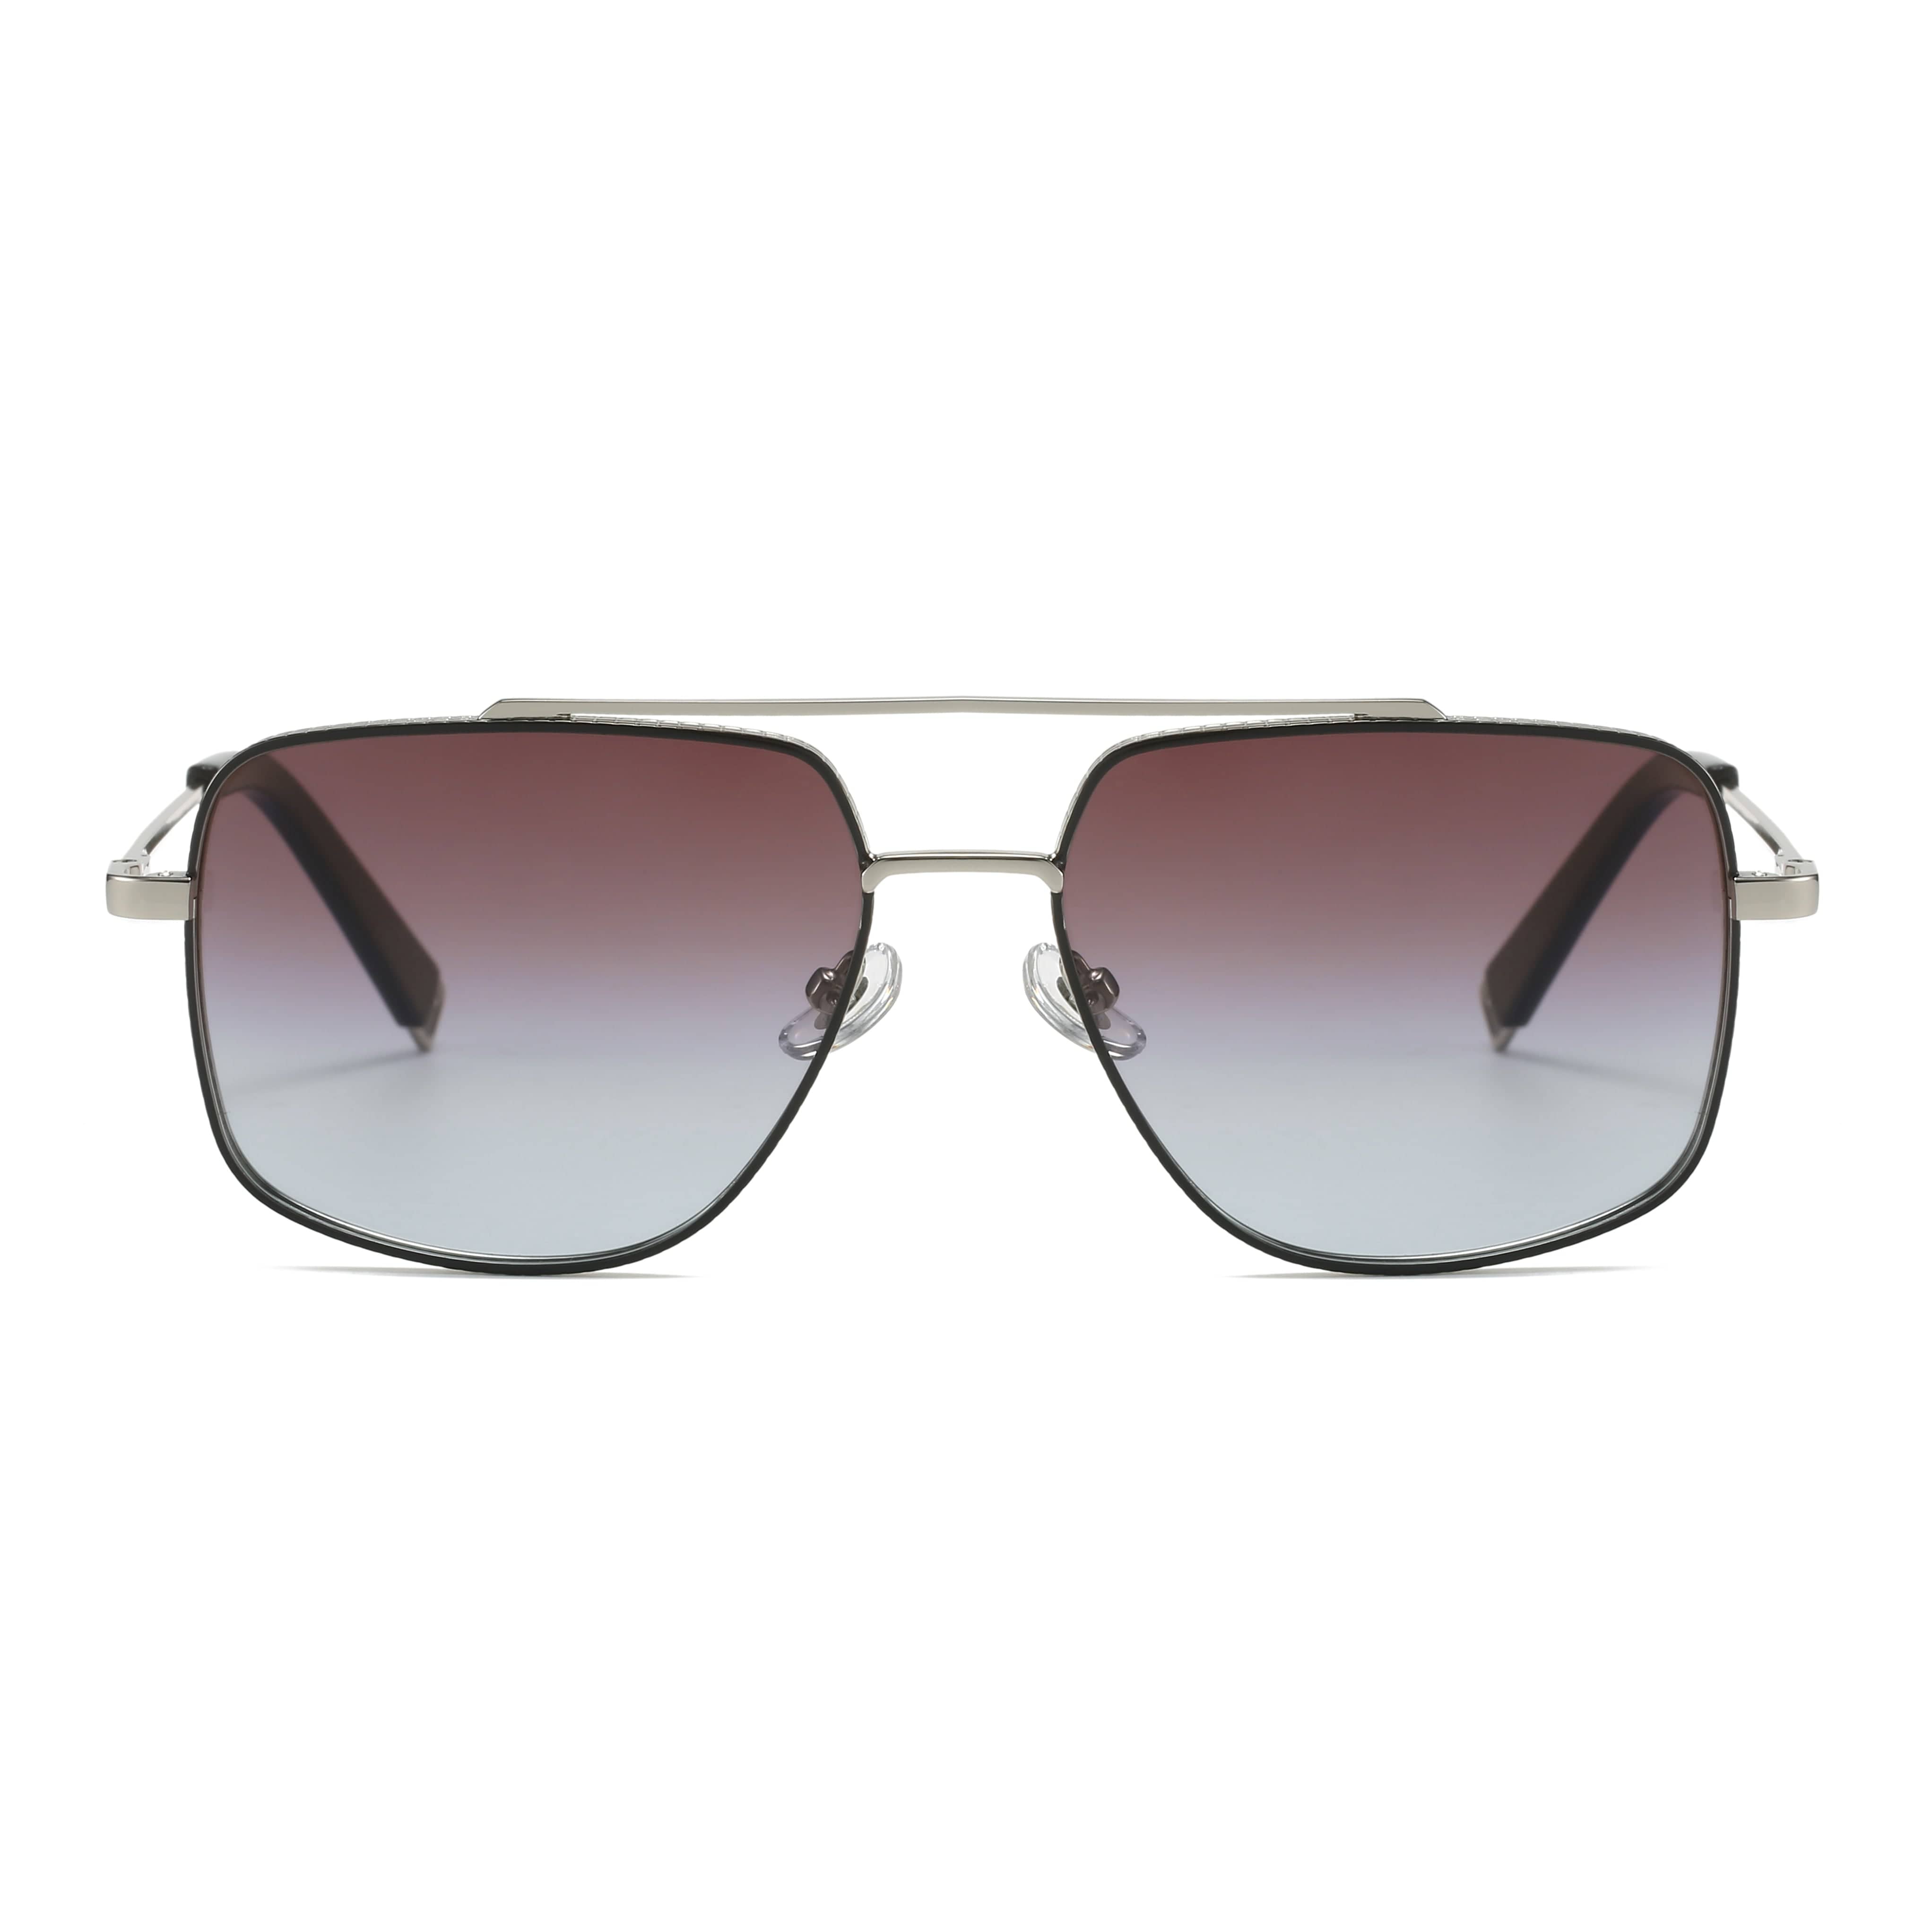 GIUSTIZIERI VECCHI Sunglasses Medium / Plum Wine Blaze Shield Duo